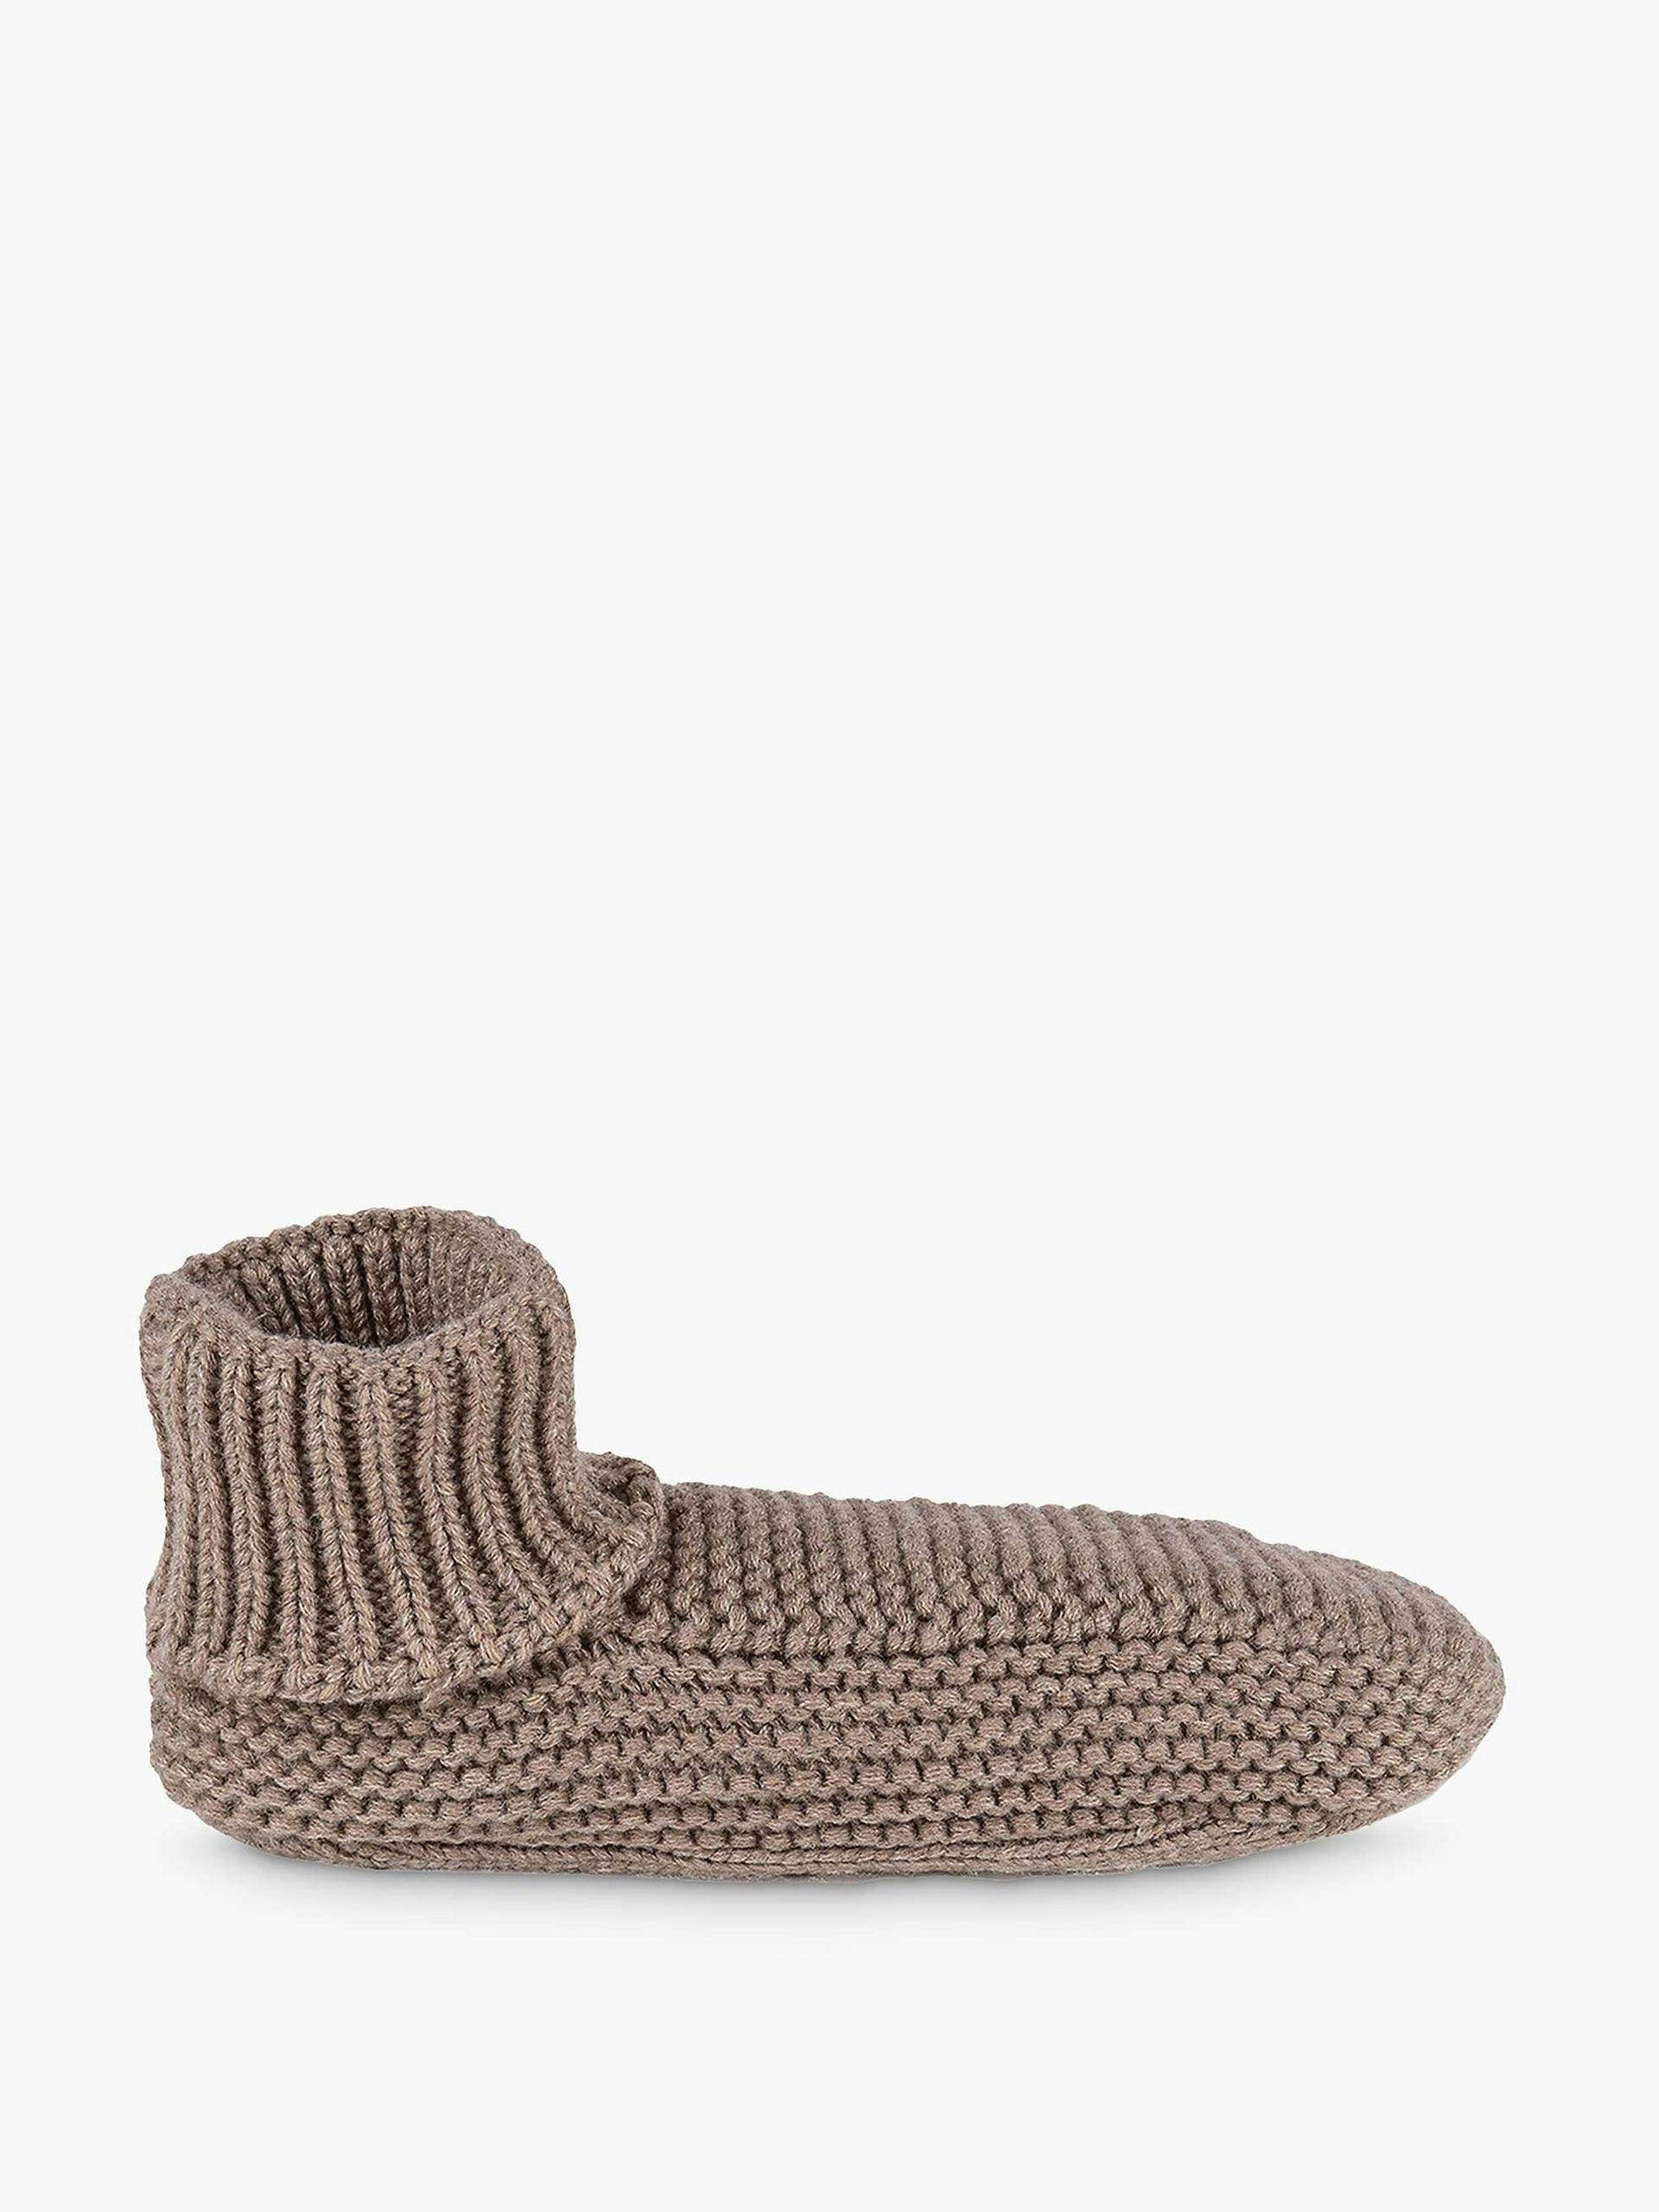 Nordic handcrafted boot slipper socks